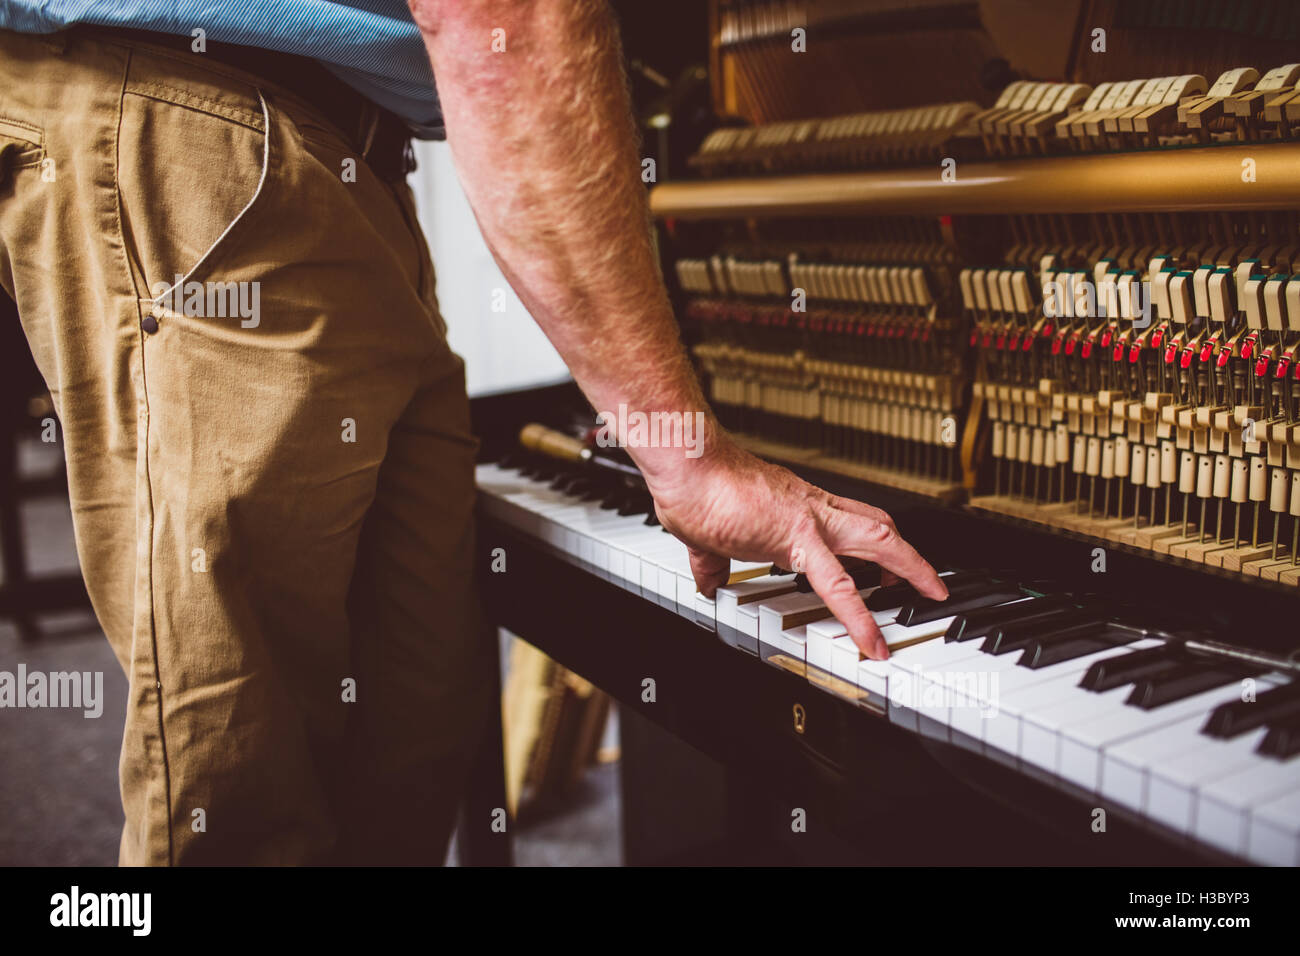 Piano technician repairing the piano Stock Photo